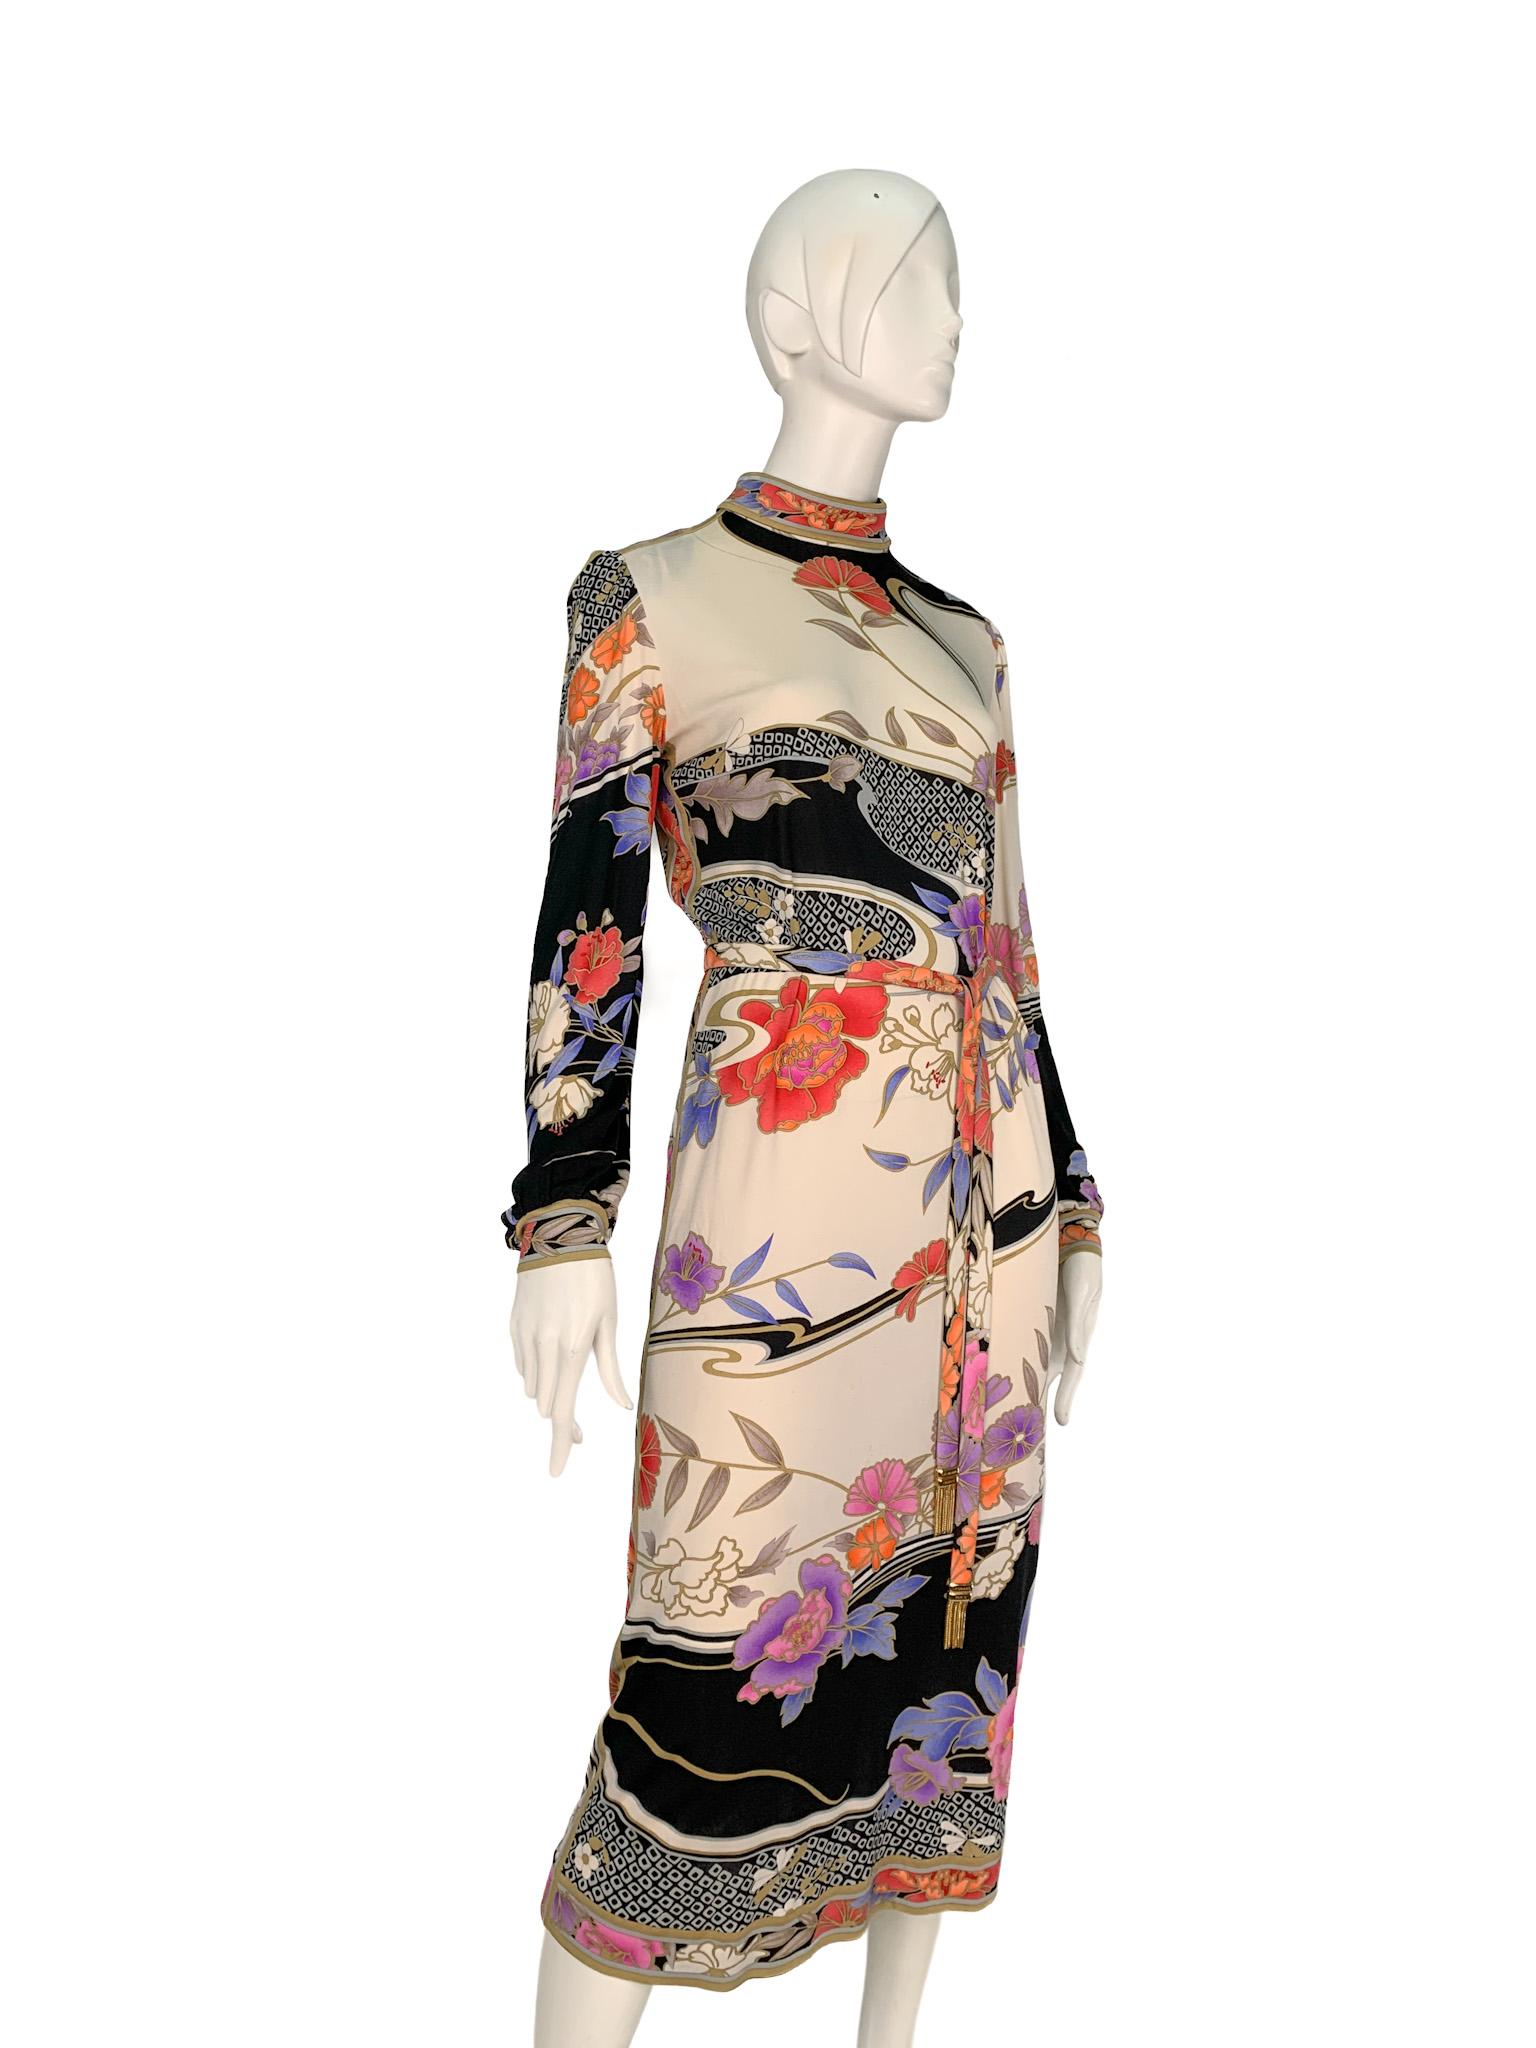 Leonard Paris printed dress in 100% mikado silk jersey. 1